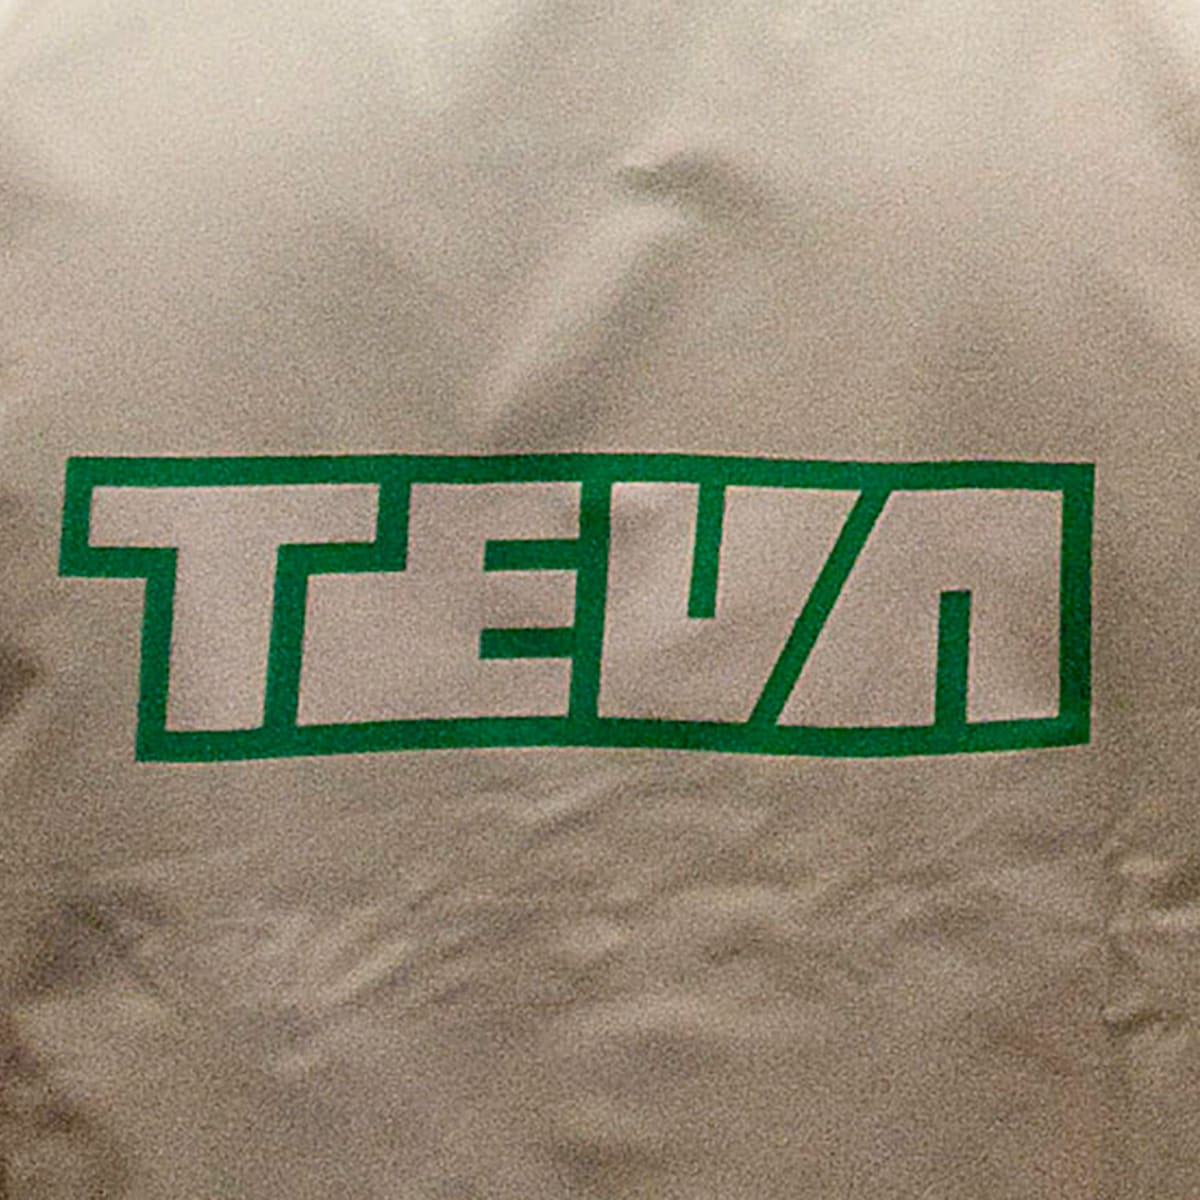 Alaska Excel Pickering 3 Reasons to Buy Teva Right Now - TheStreet